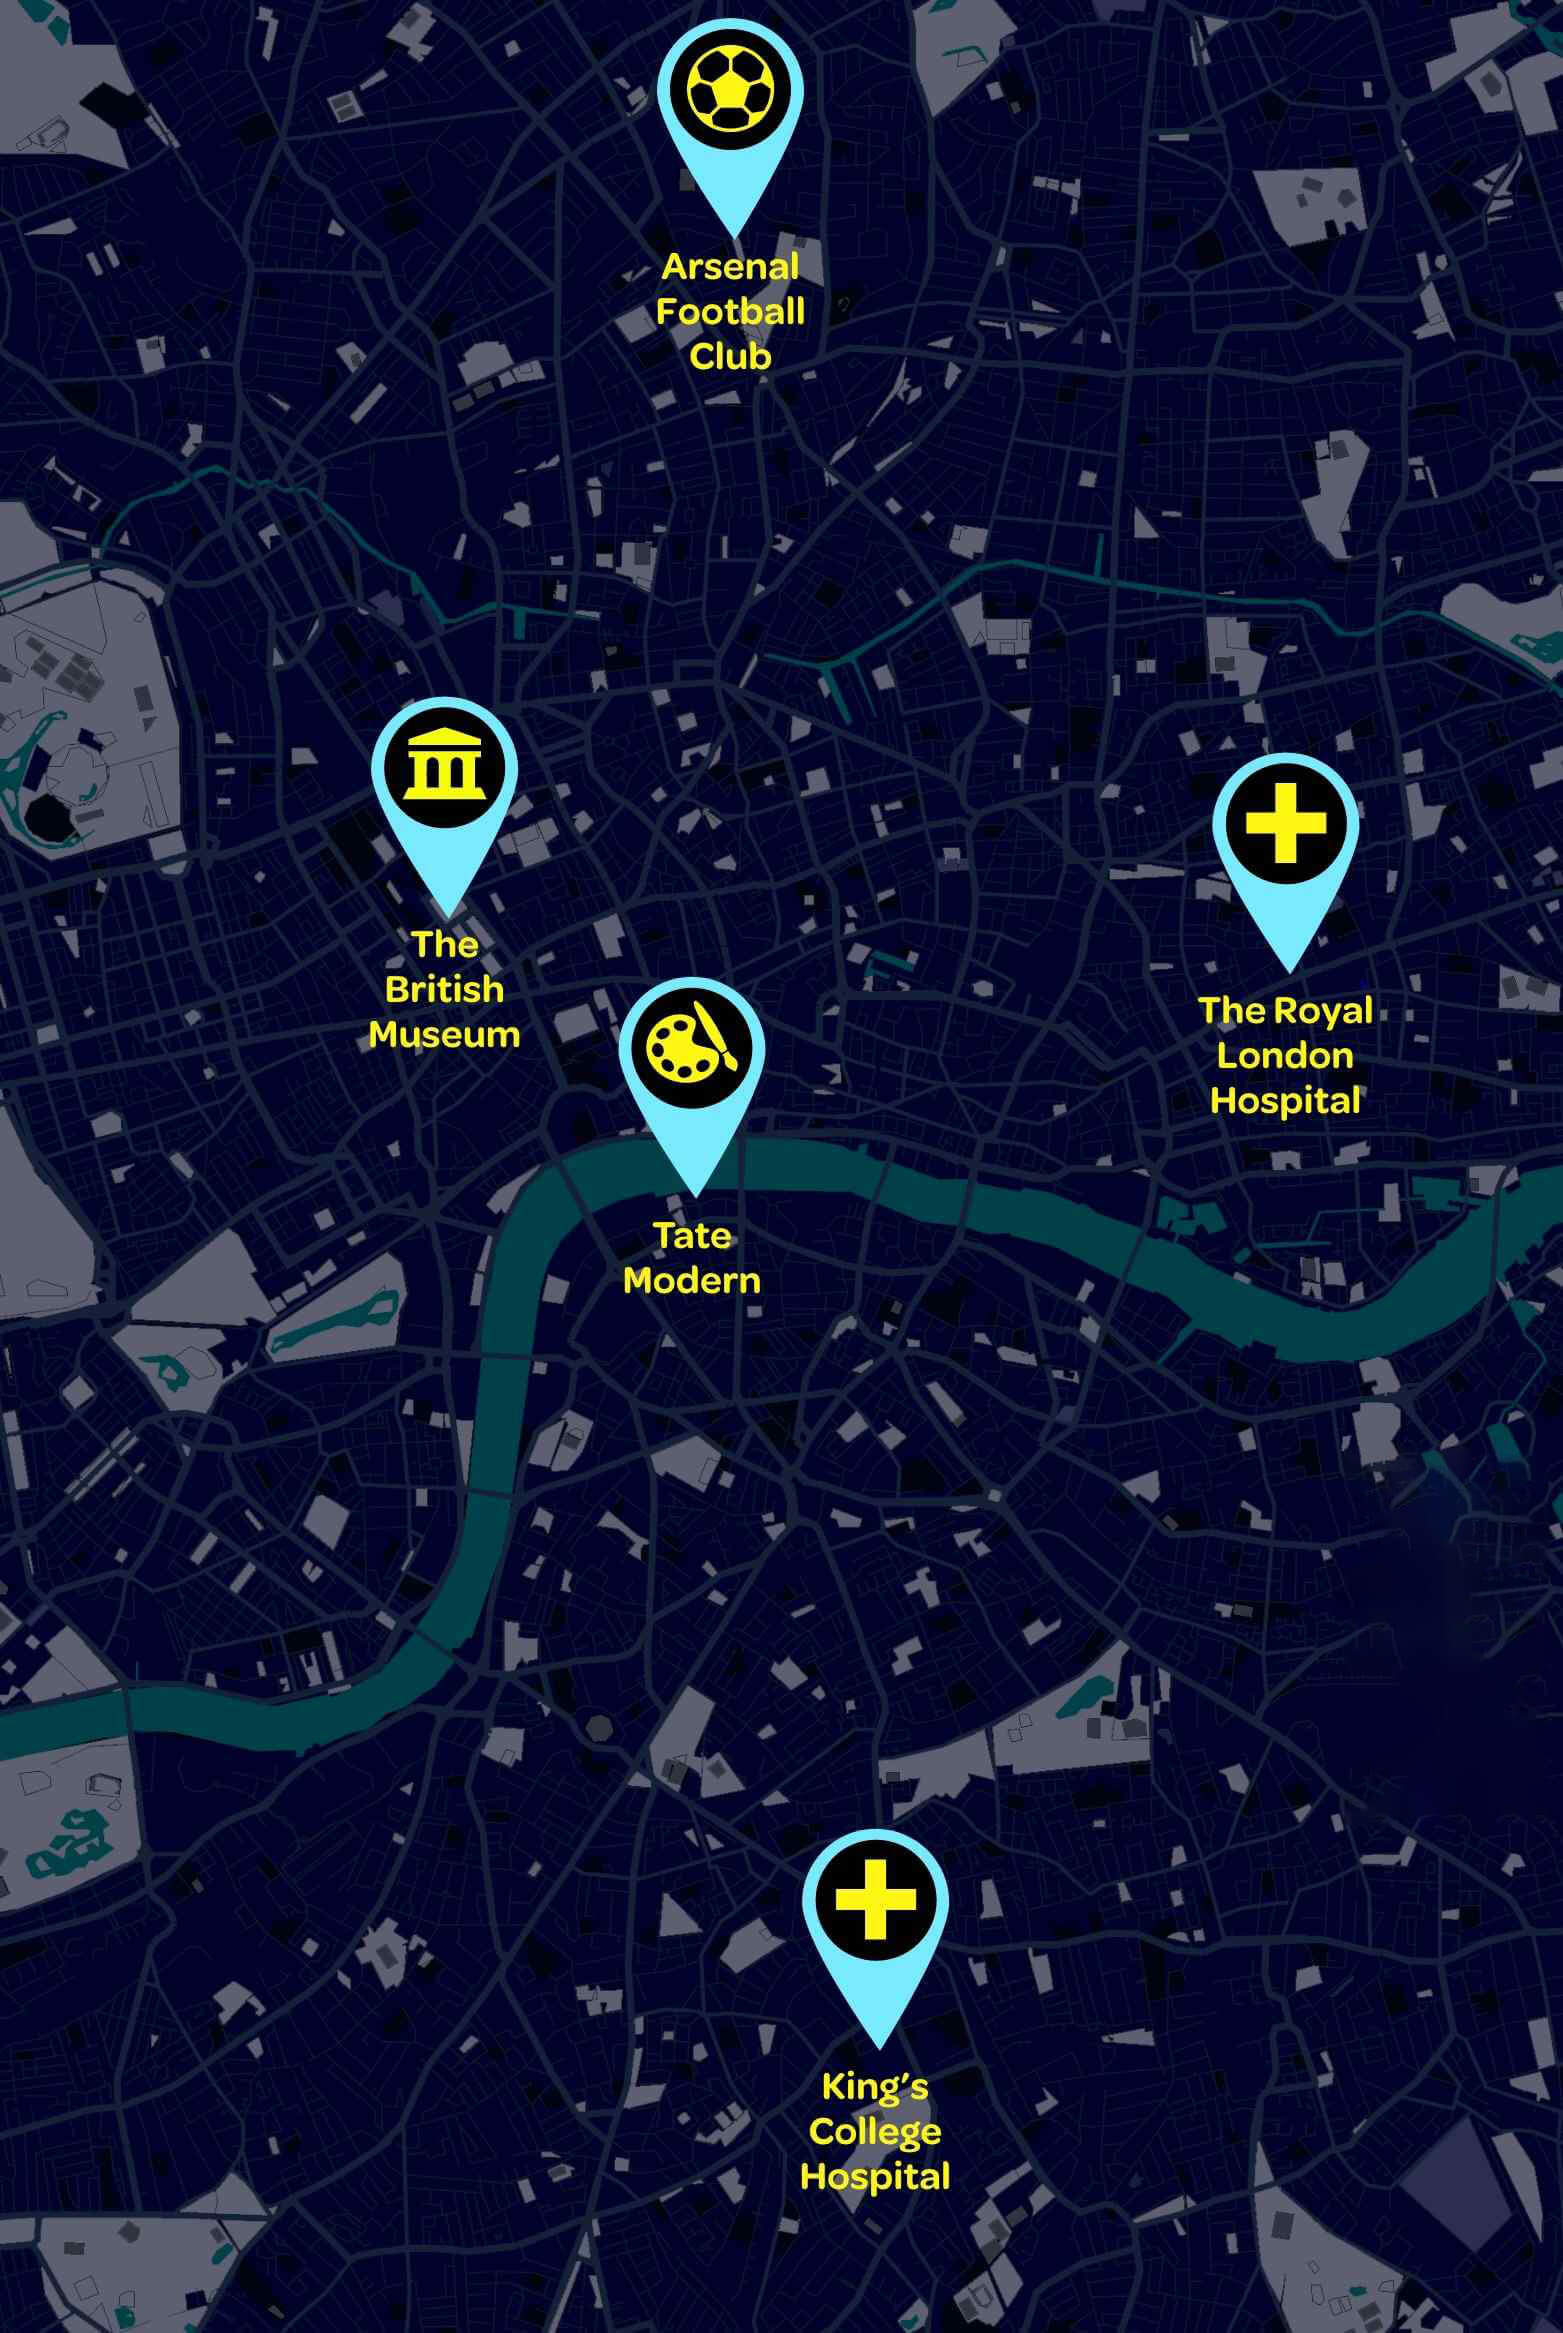 Map of landmarks around London